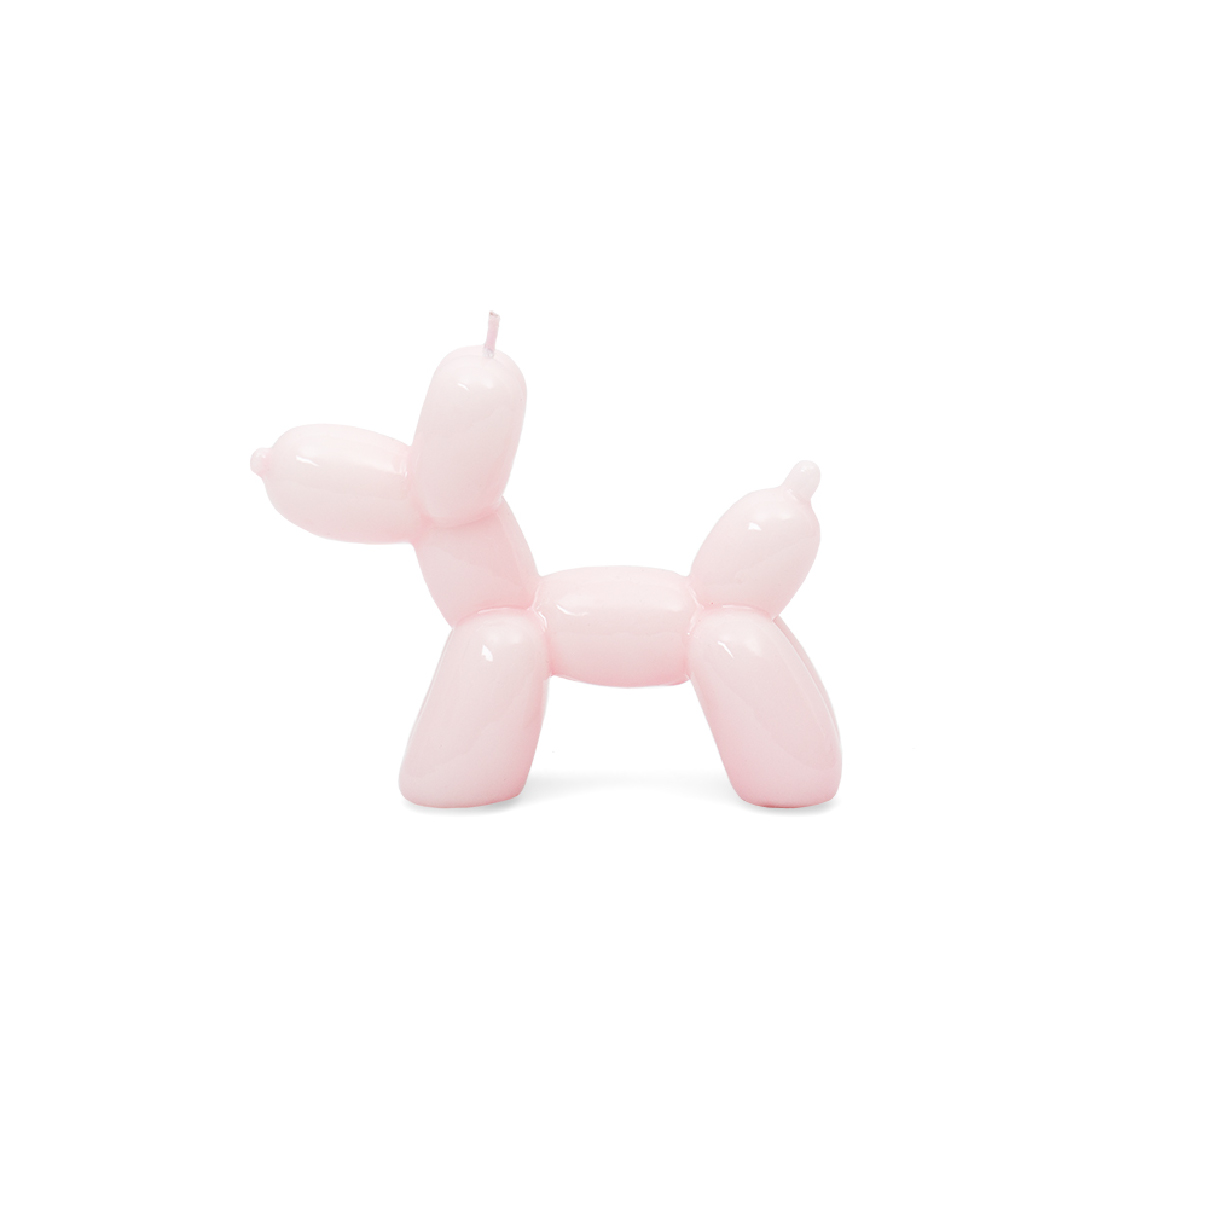 PINK BALLOON DOG CANDLE HF - Item